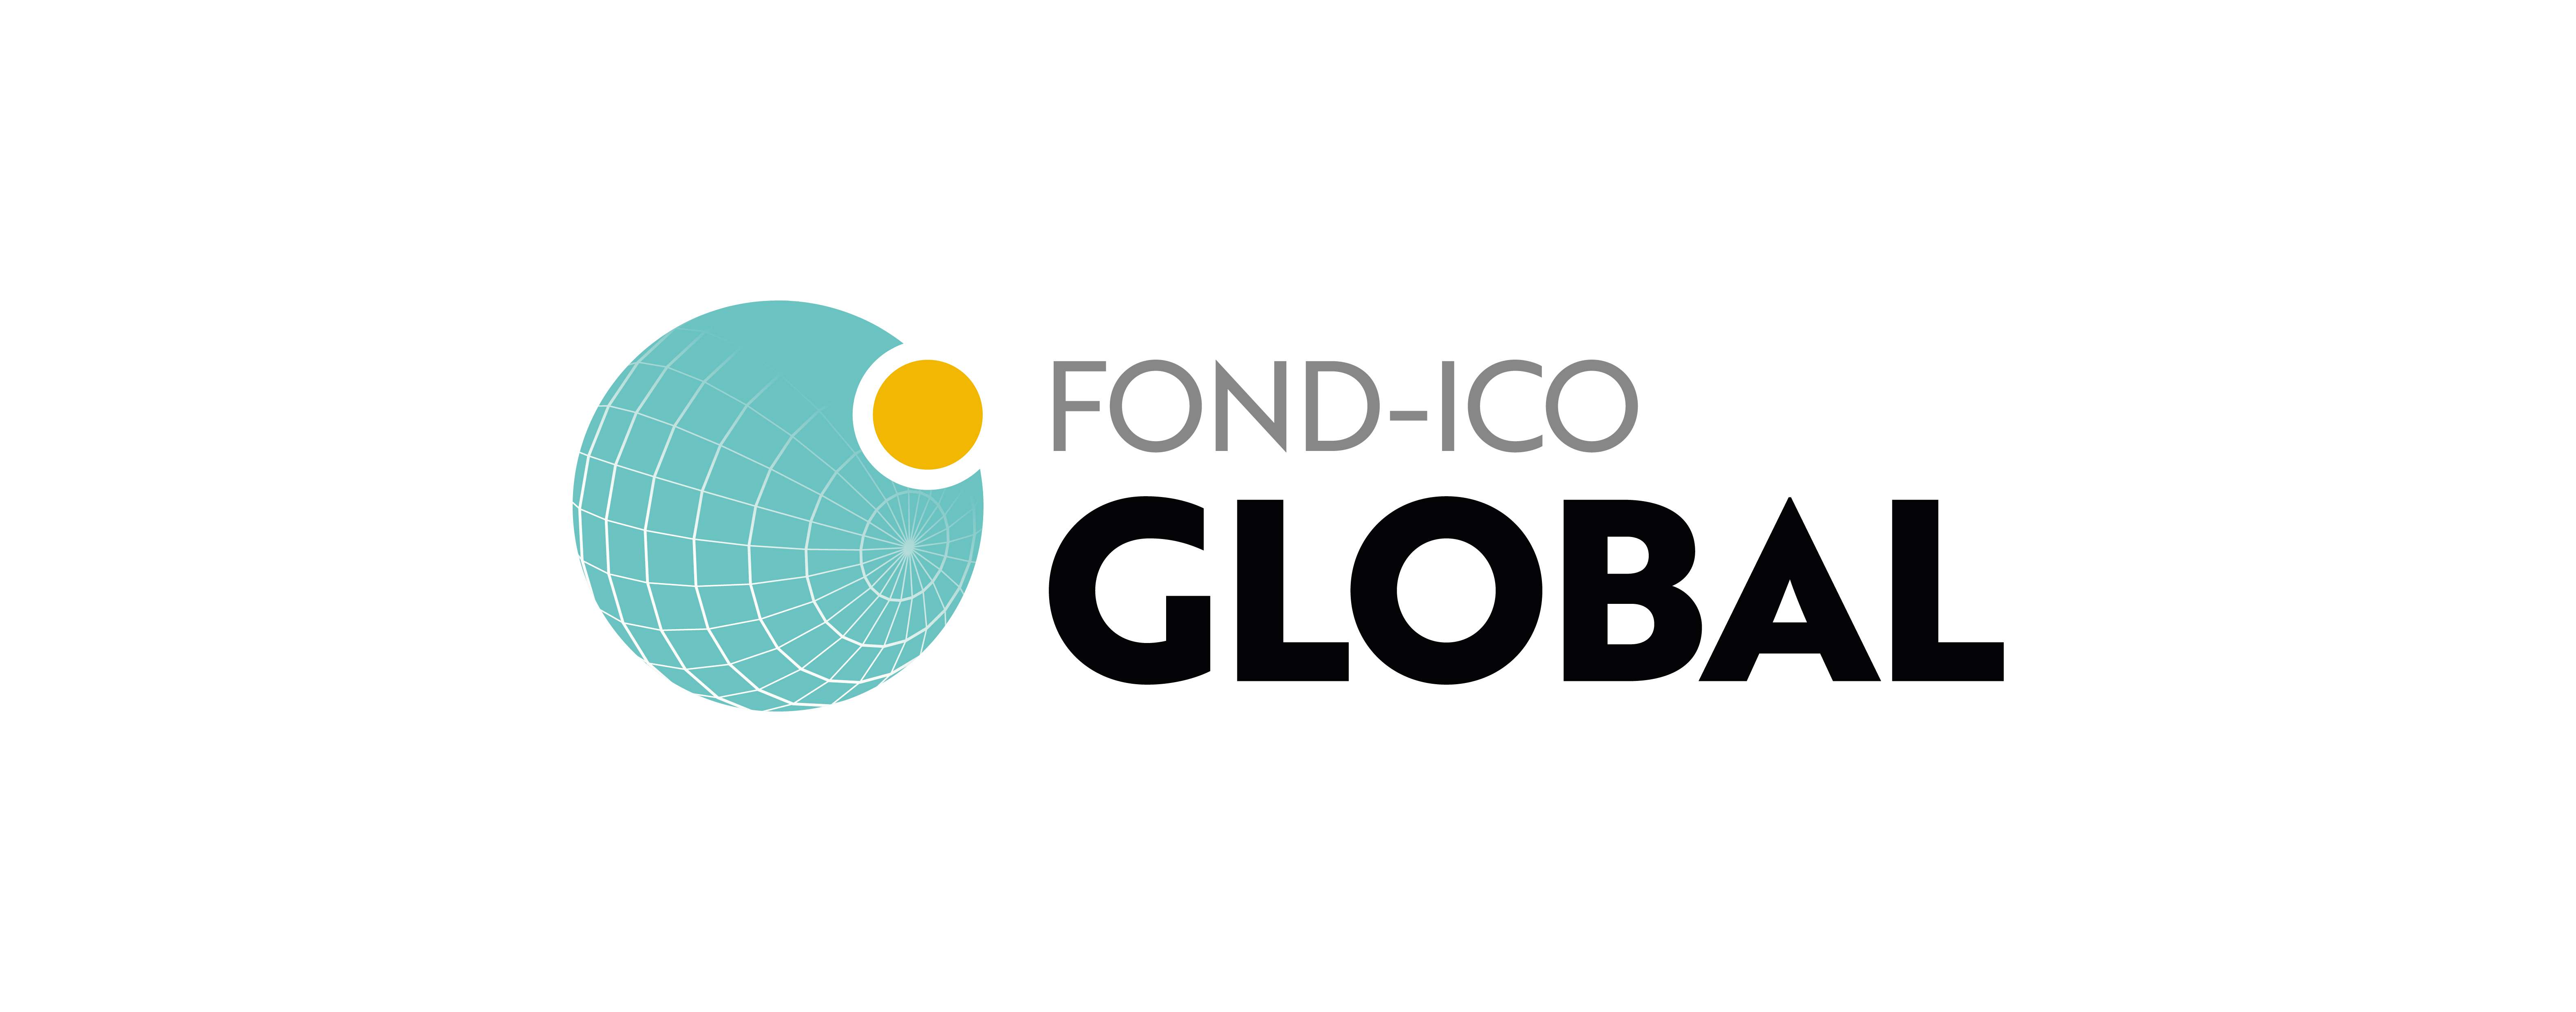 Logo Fond ICO Next Texc con EU